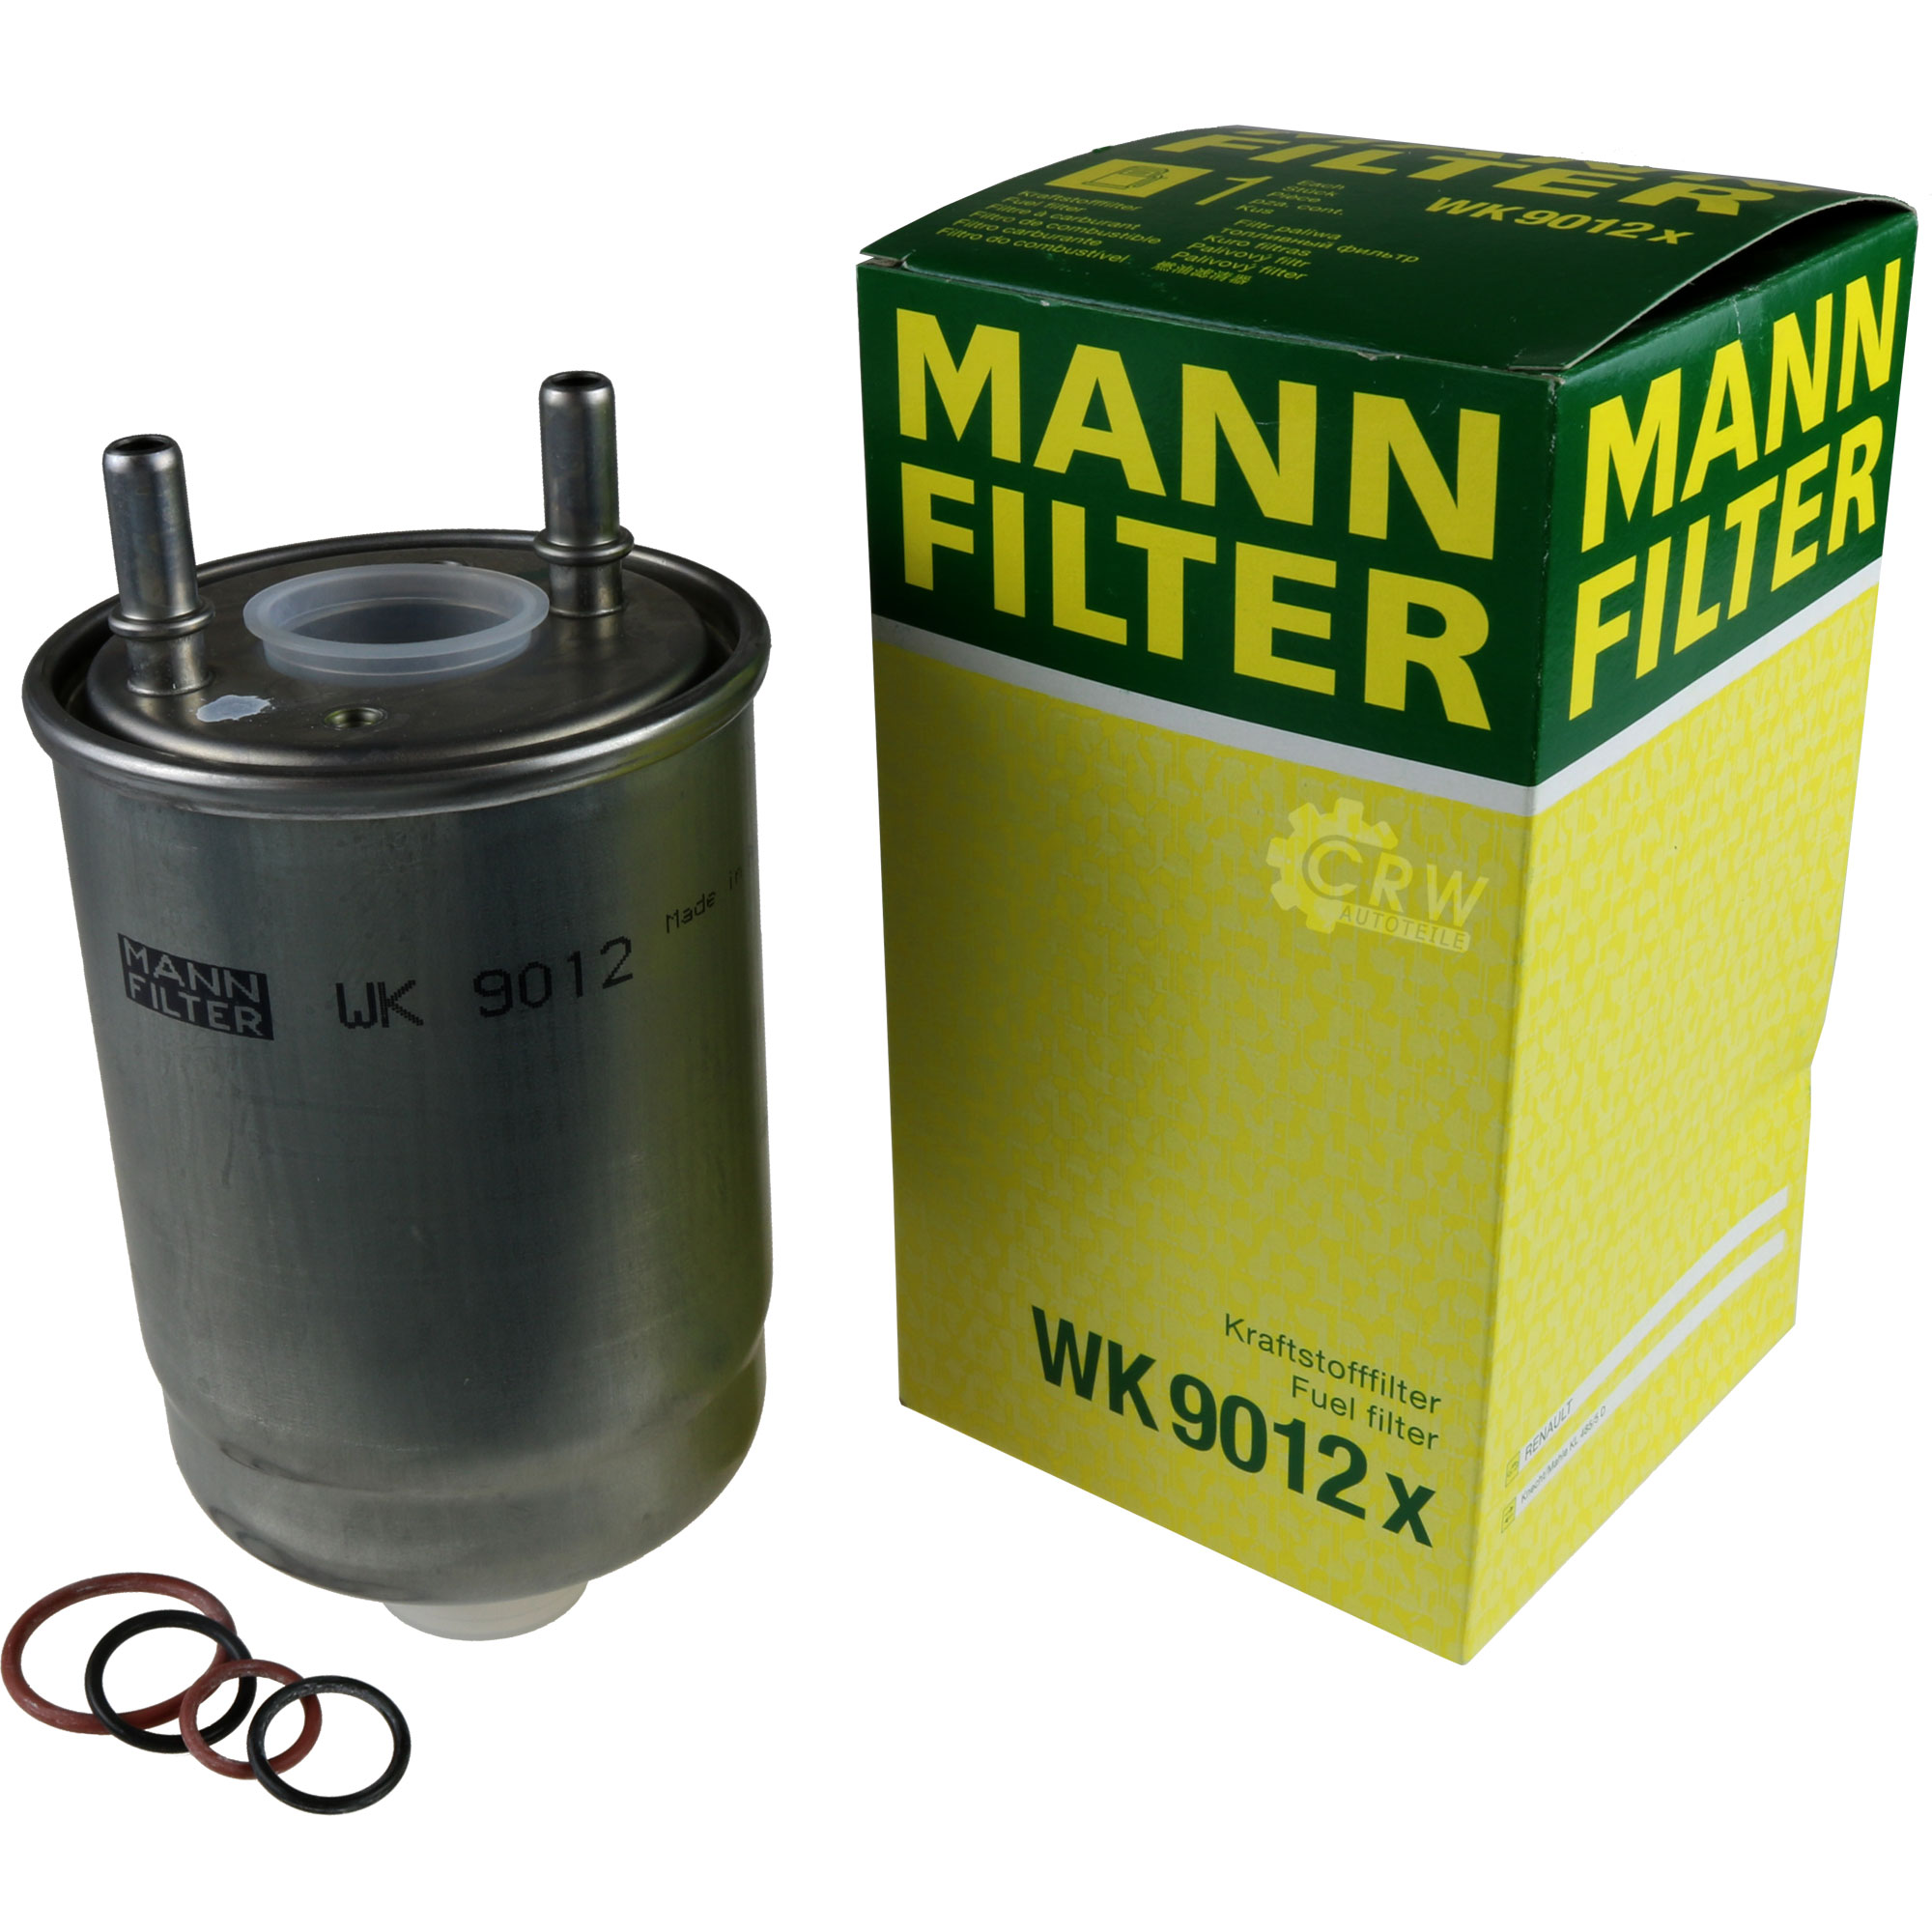 MANN-FILTER Kraftstofffilter WK 9012 x Fuel Filter